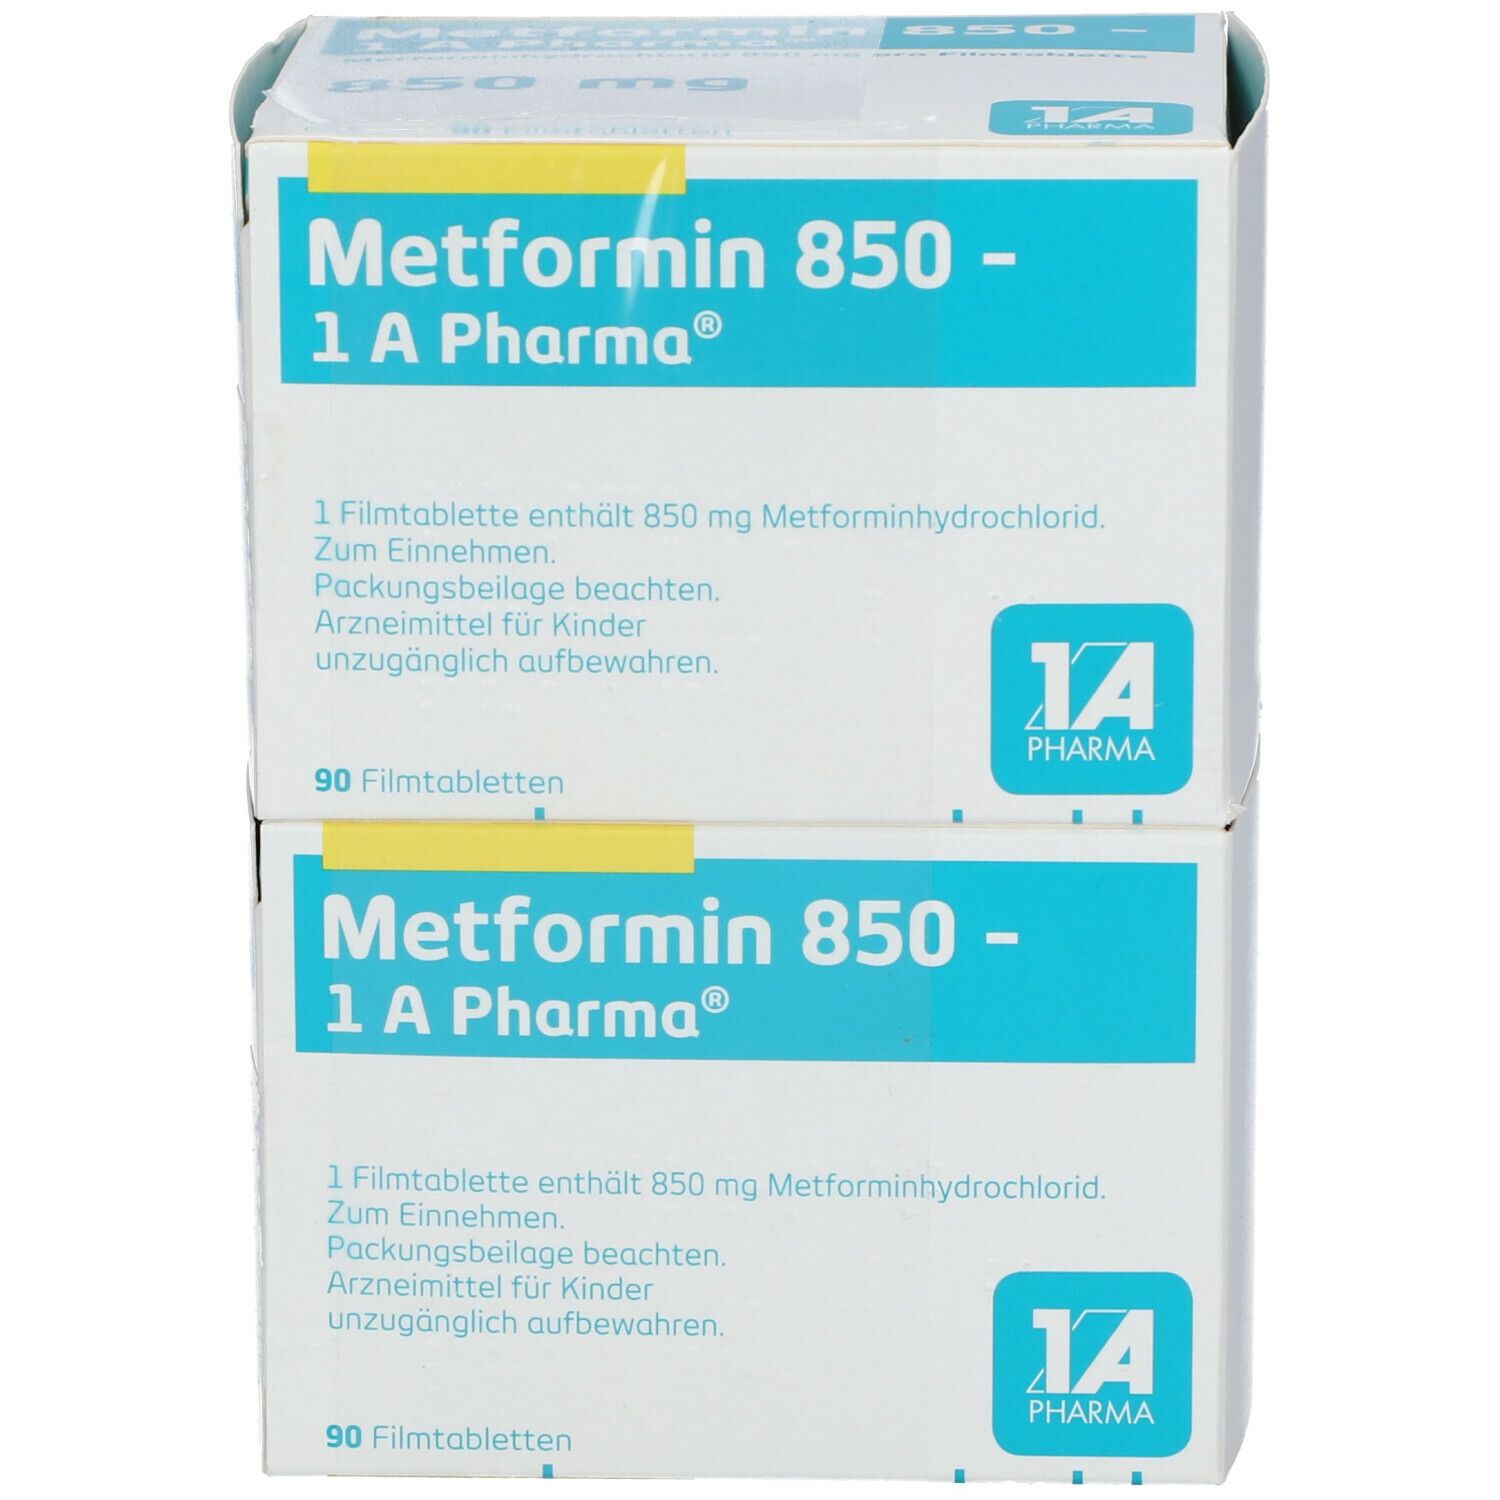 Metformin 850-1A Pharma®